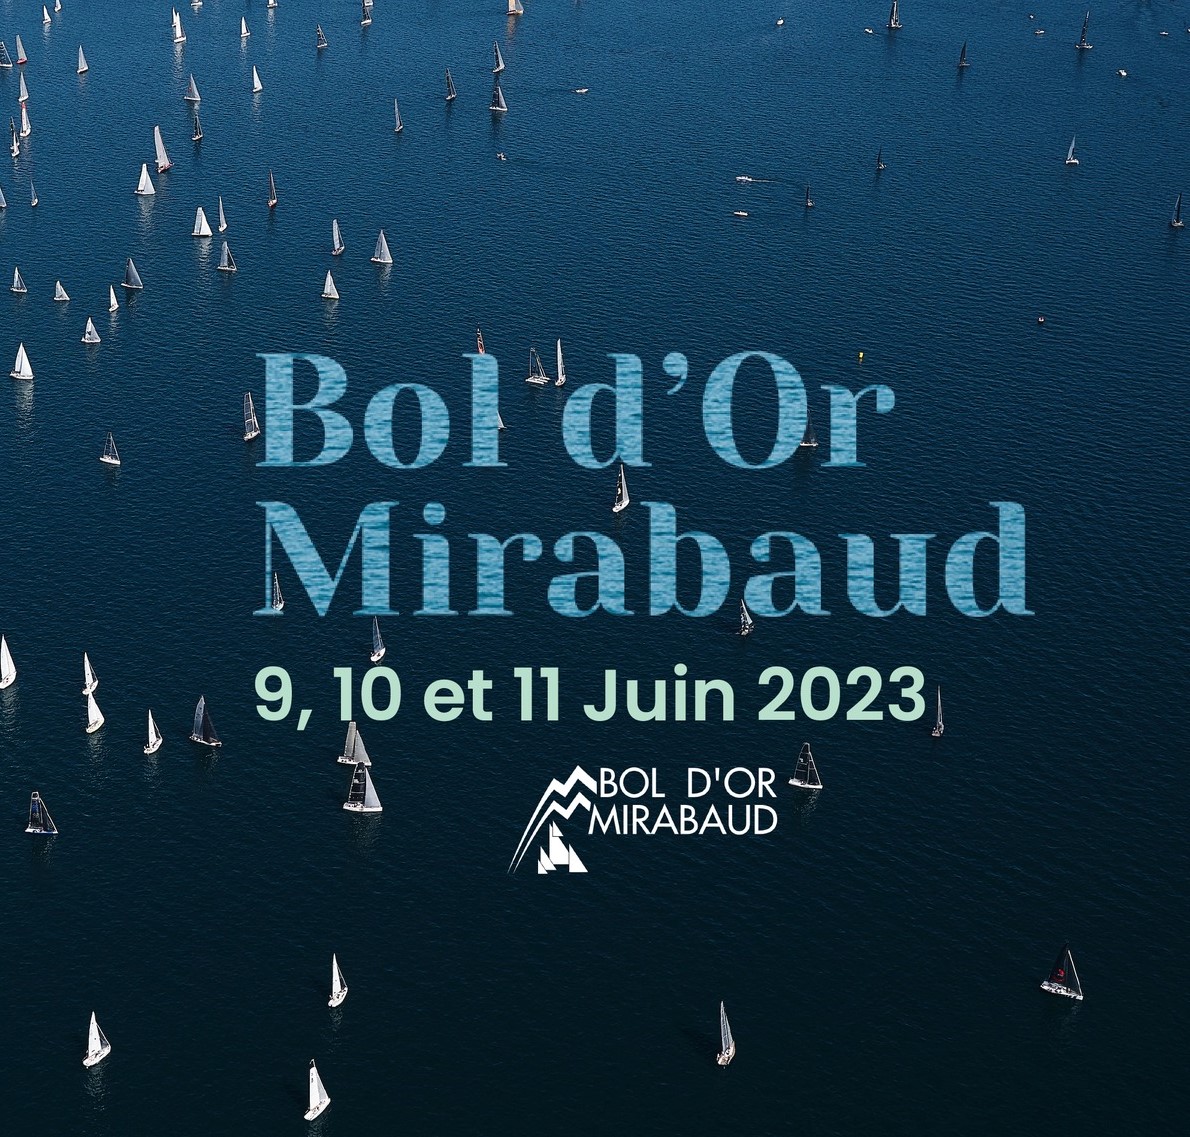 Bol d’or Mirabaud 2023